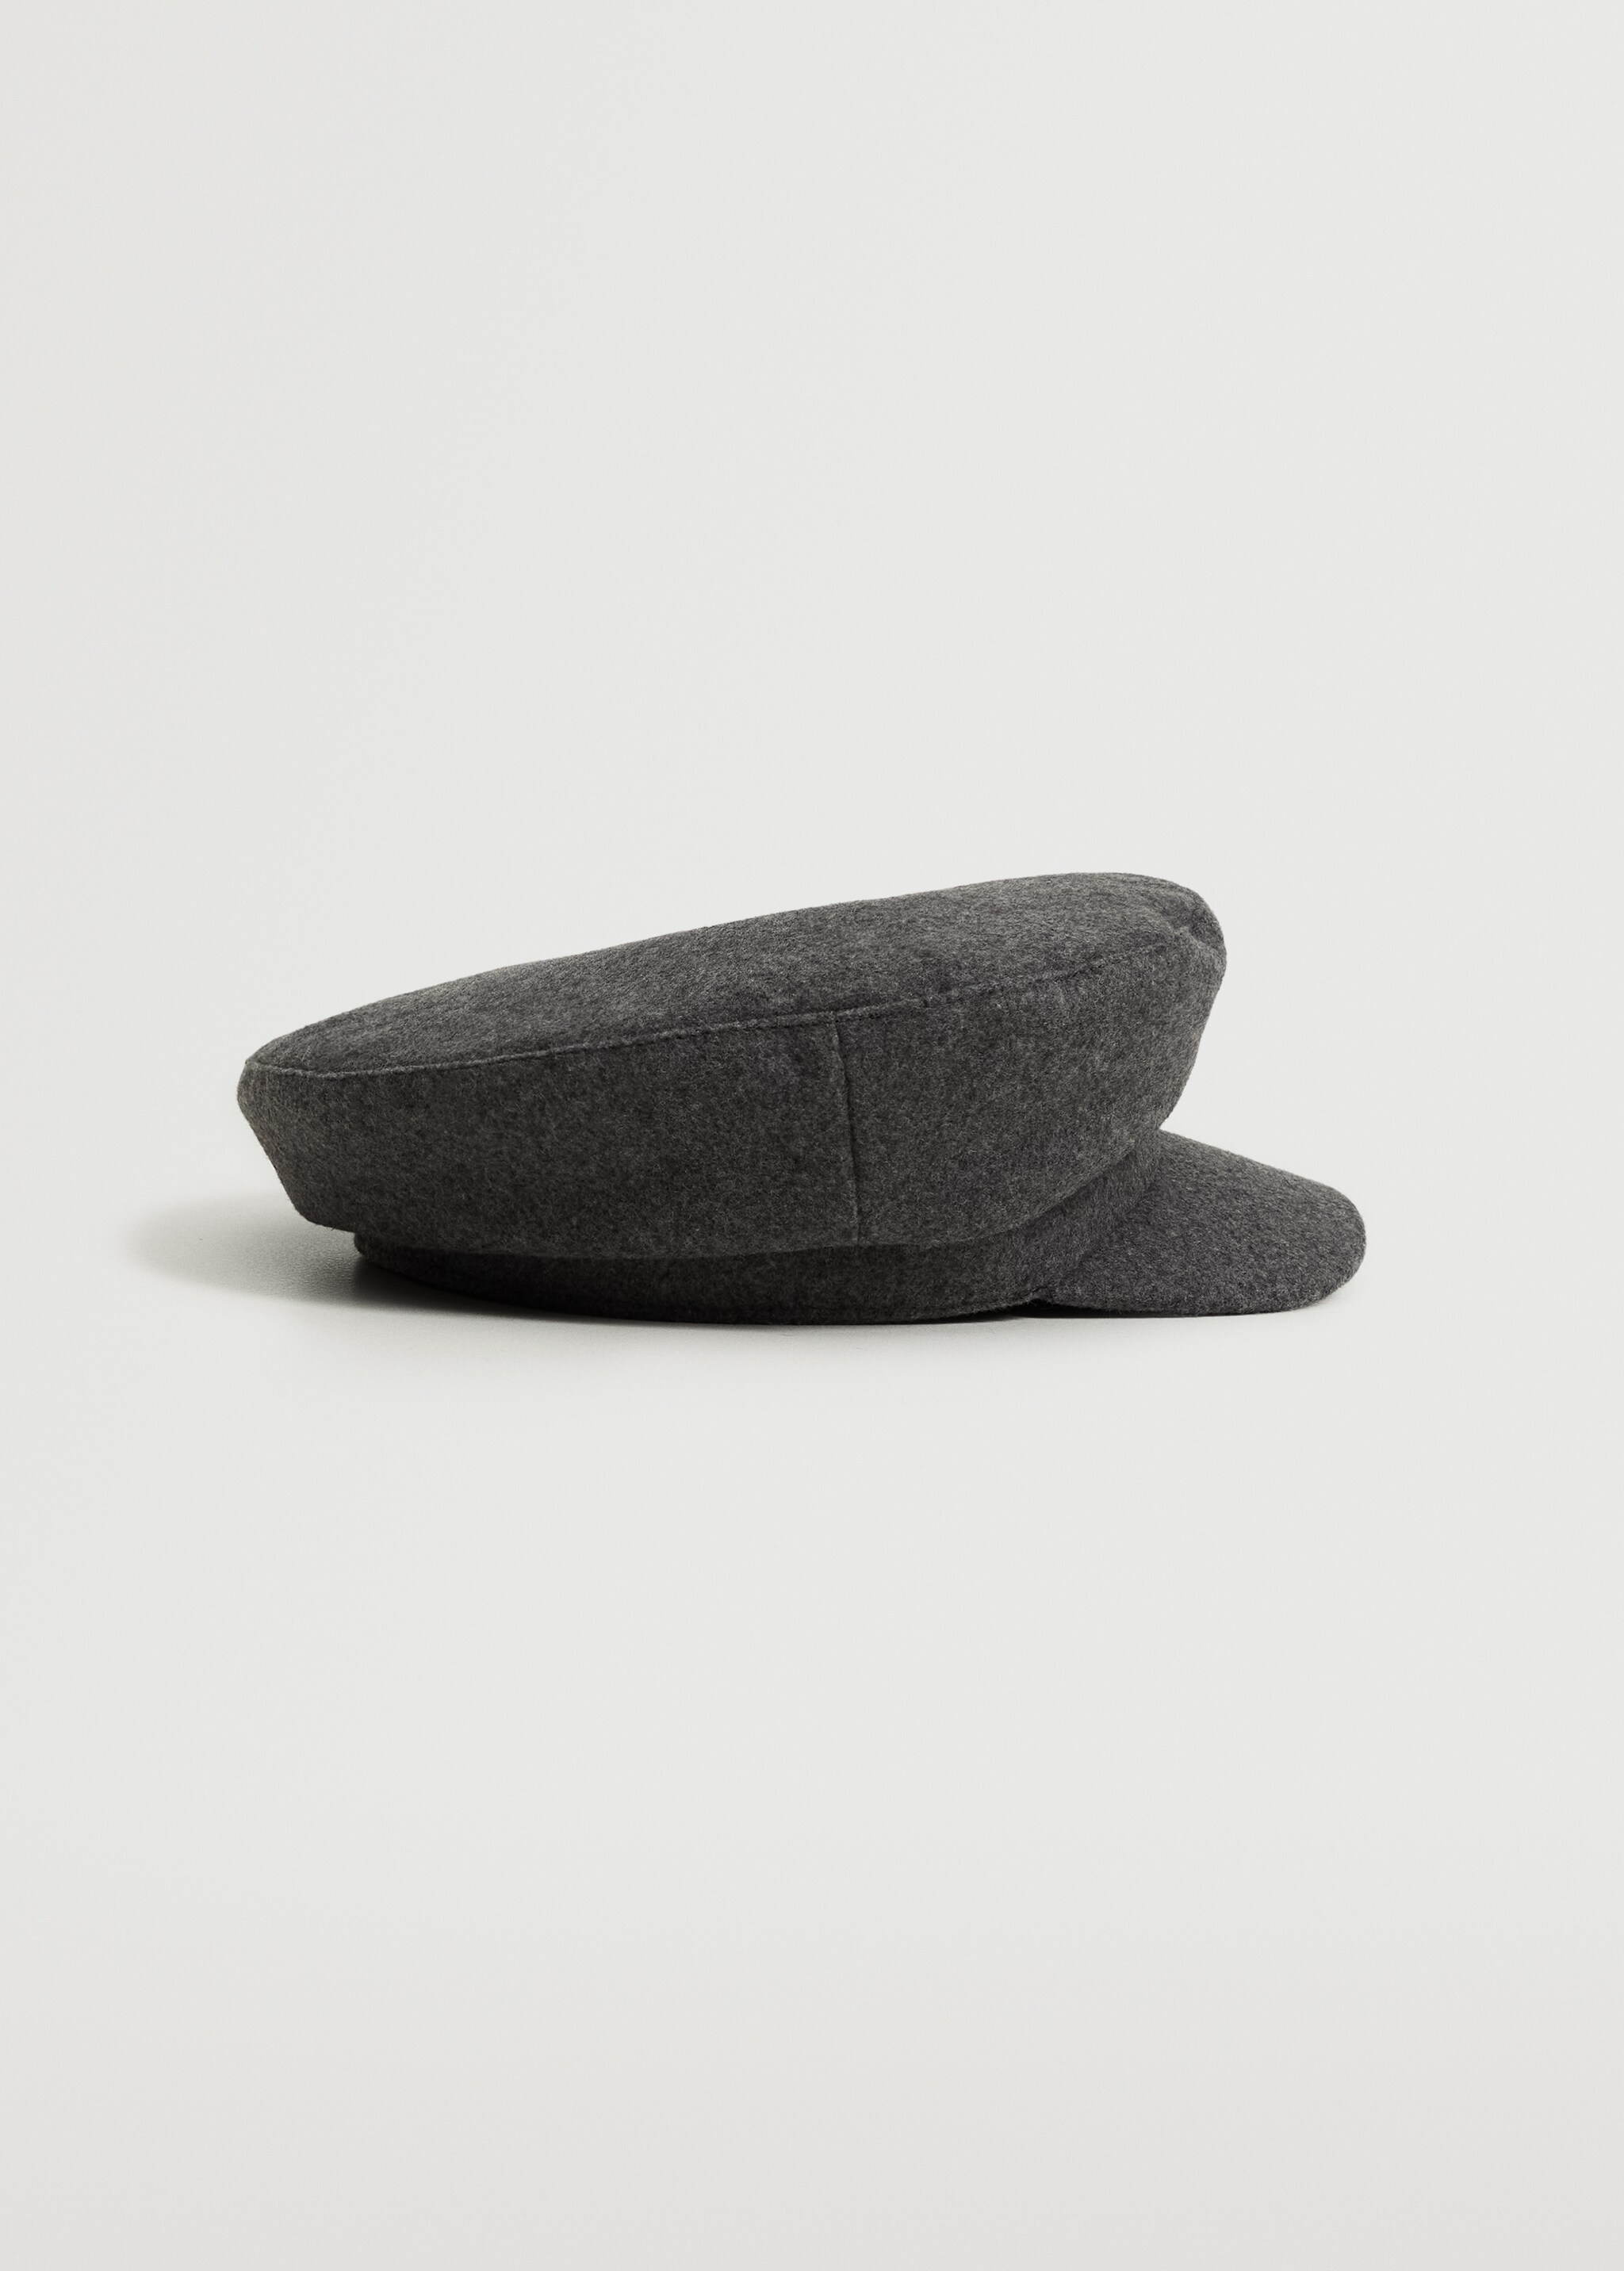  Visor beret - Article without model